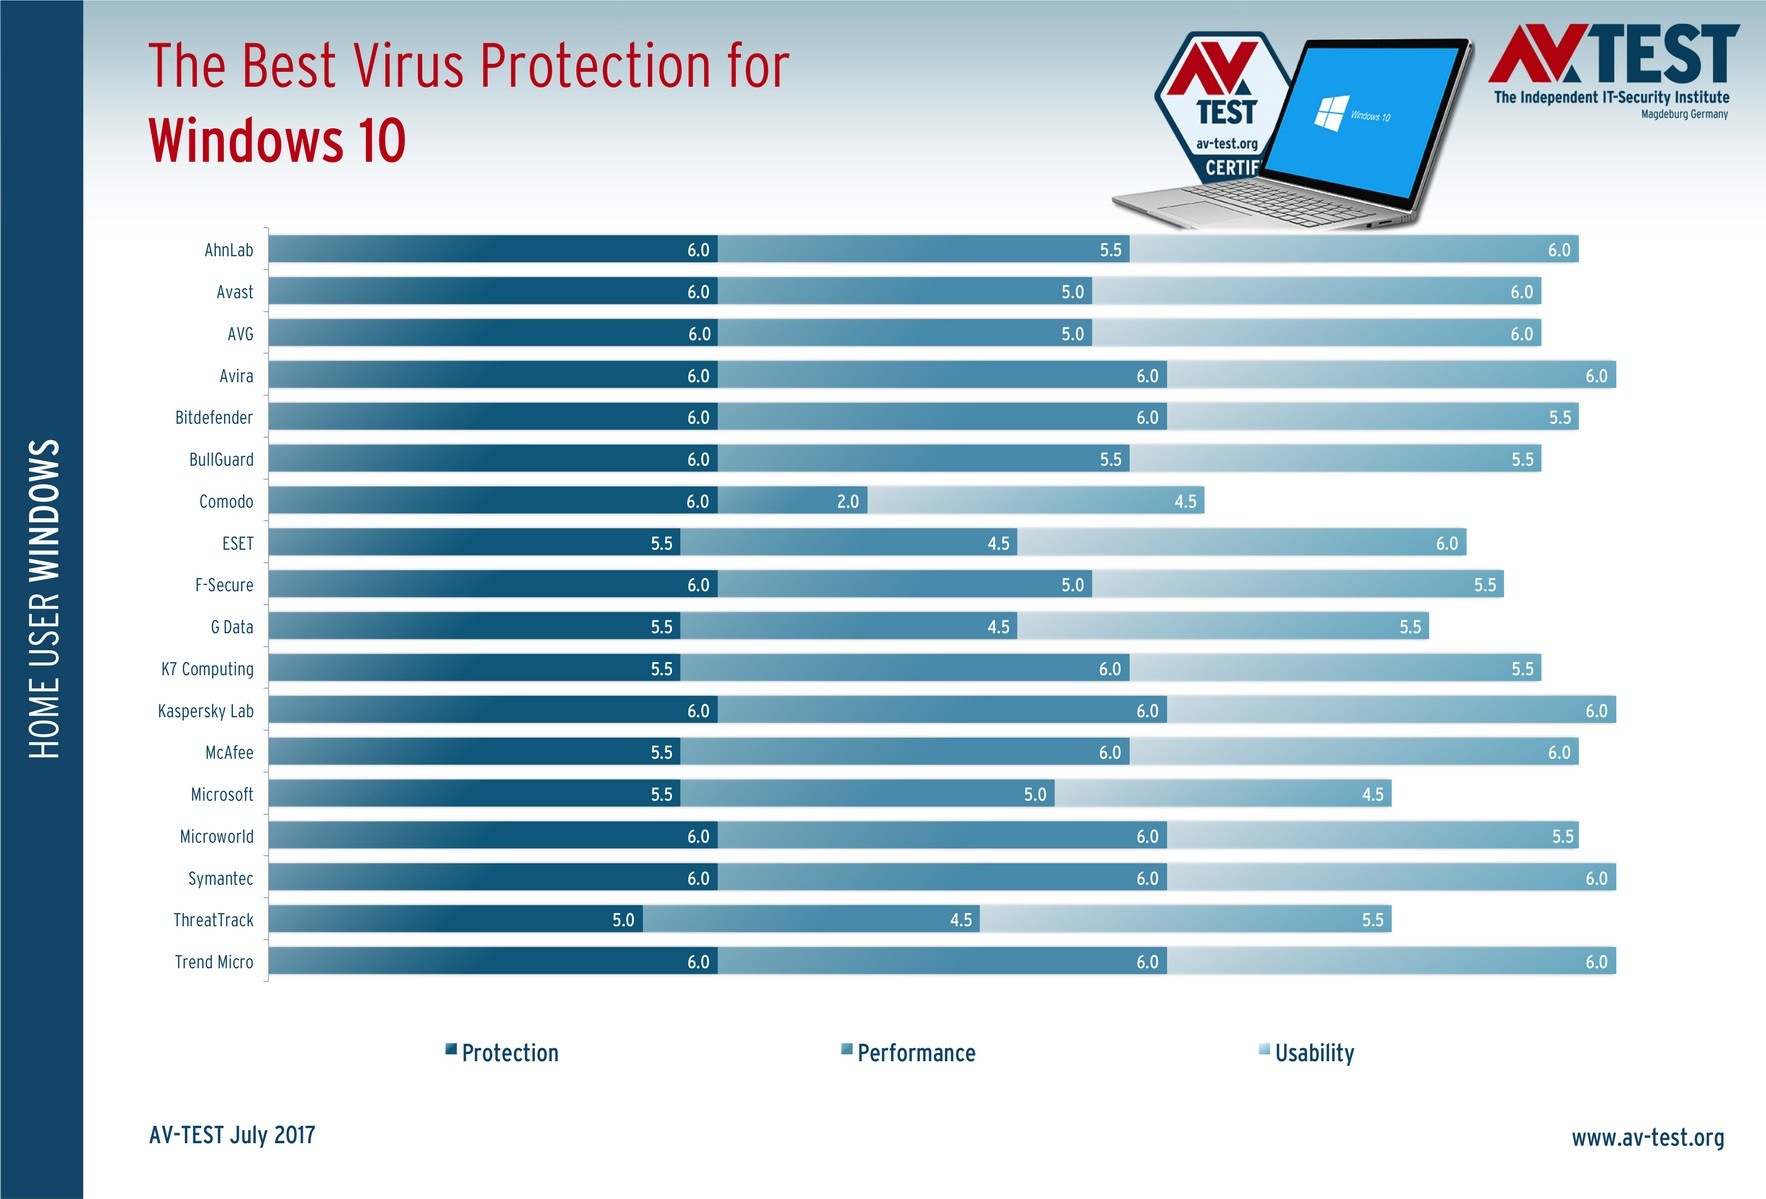 Free antivirus for windows 10 from microsoft